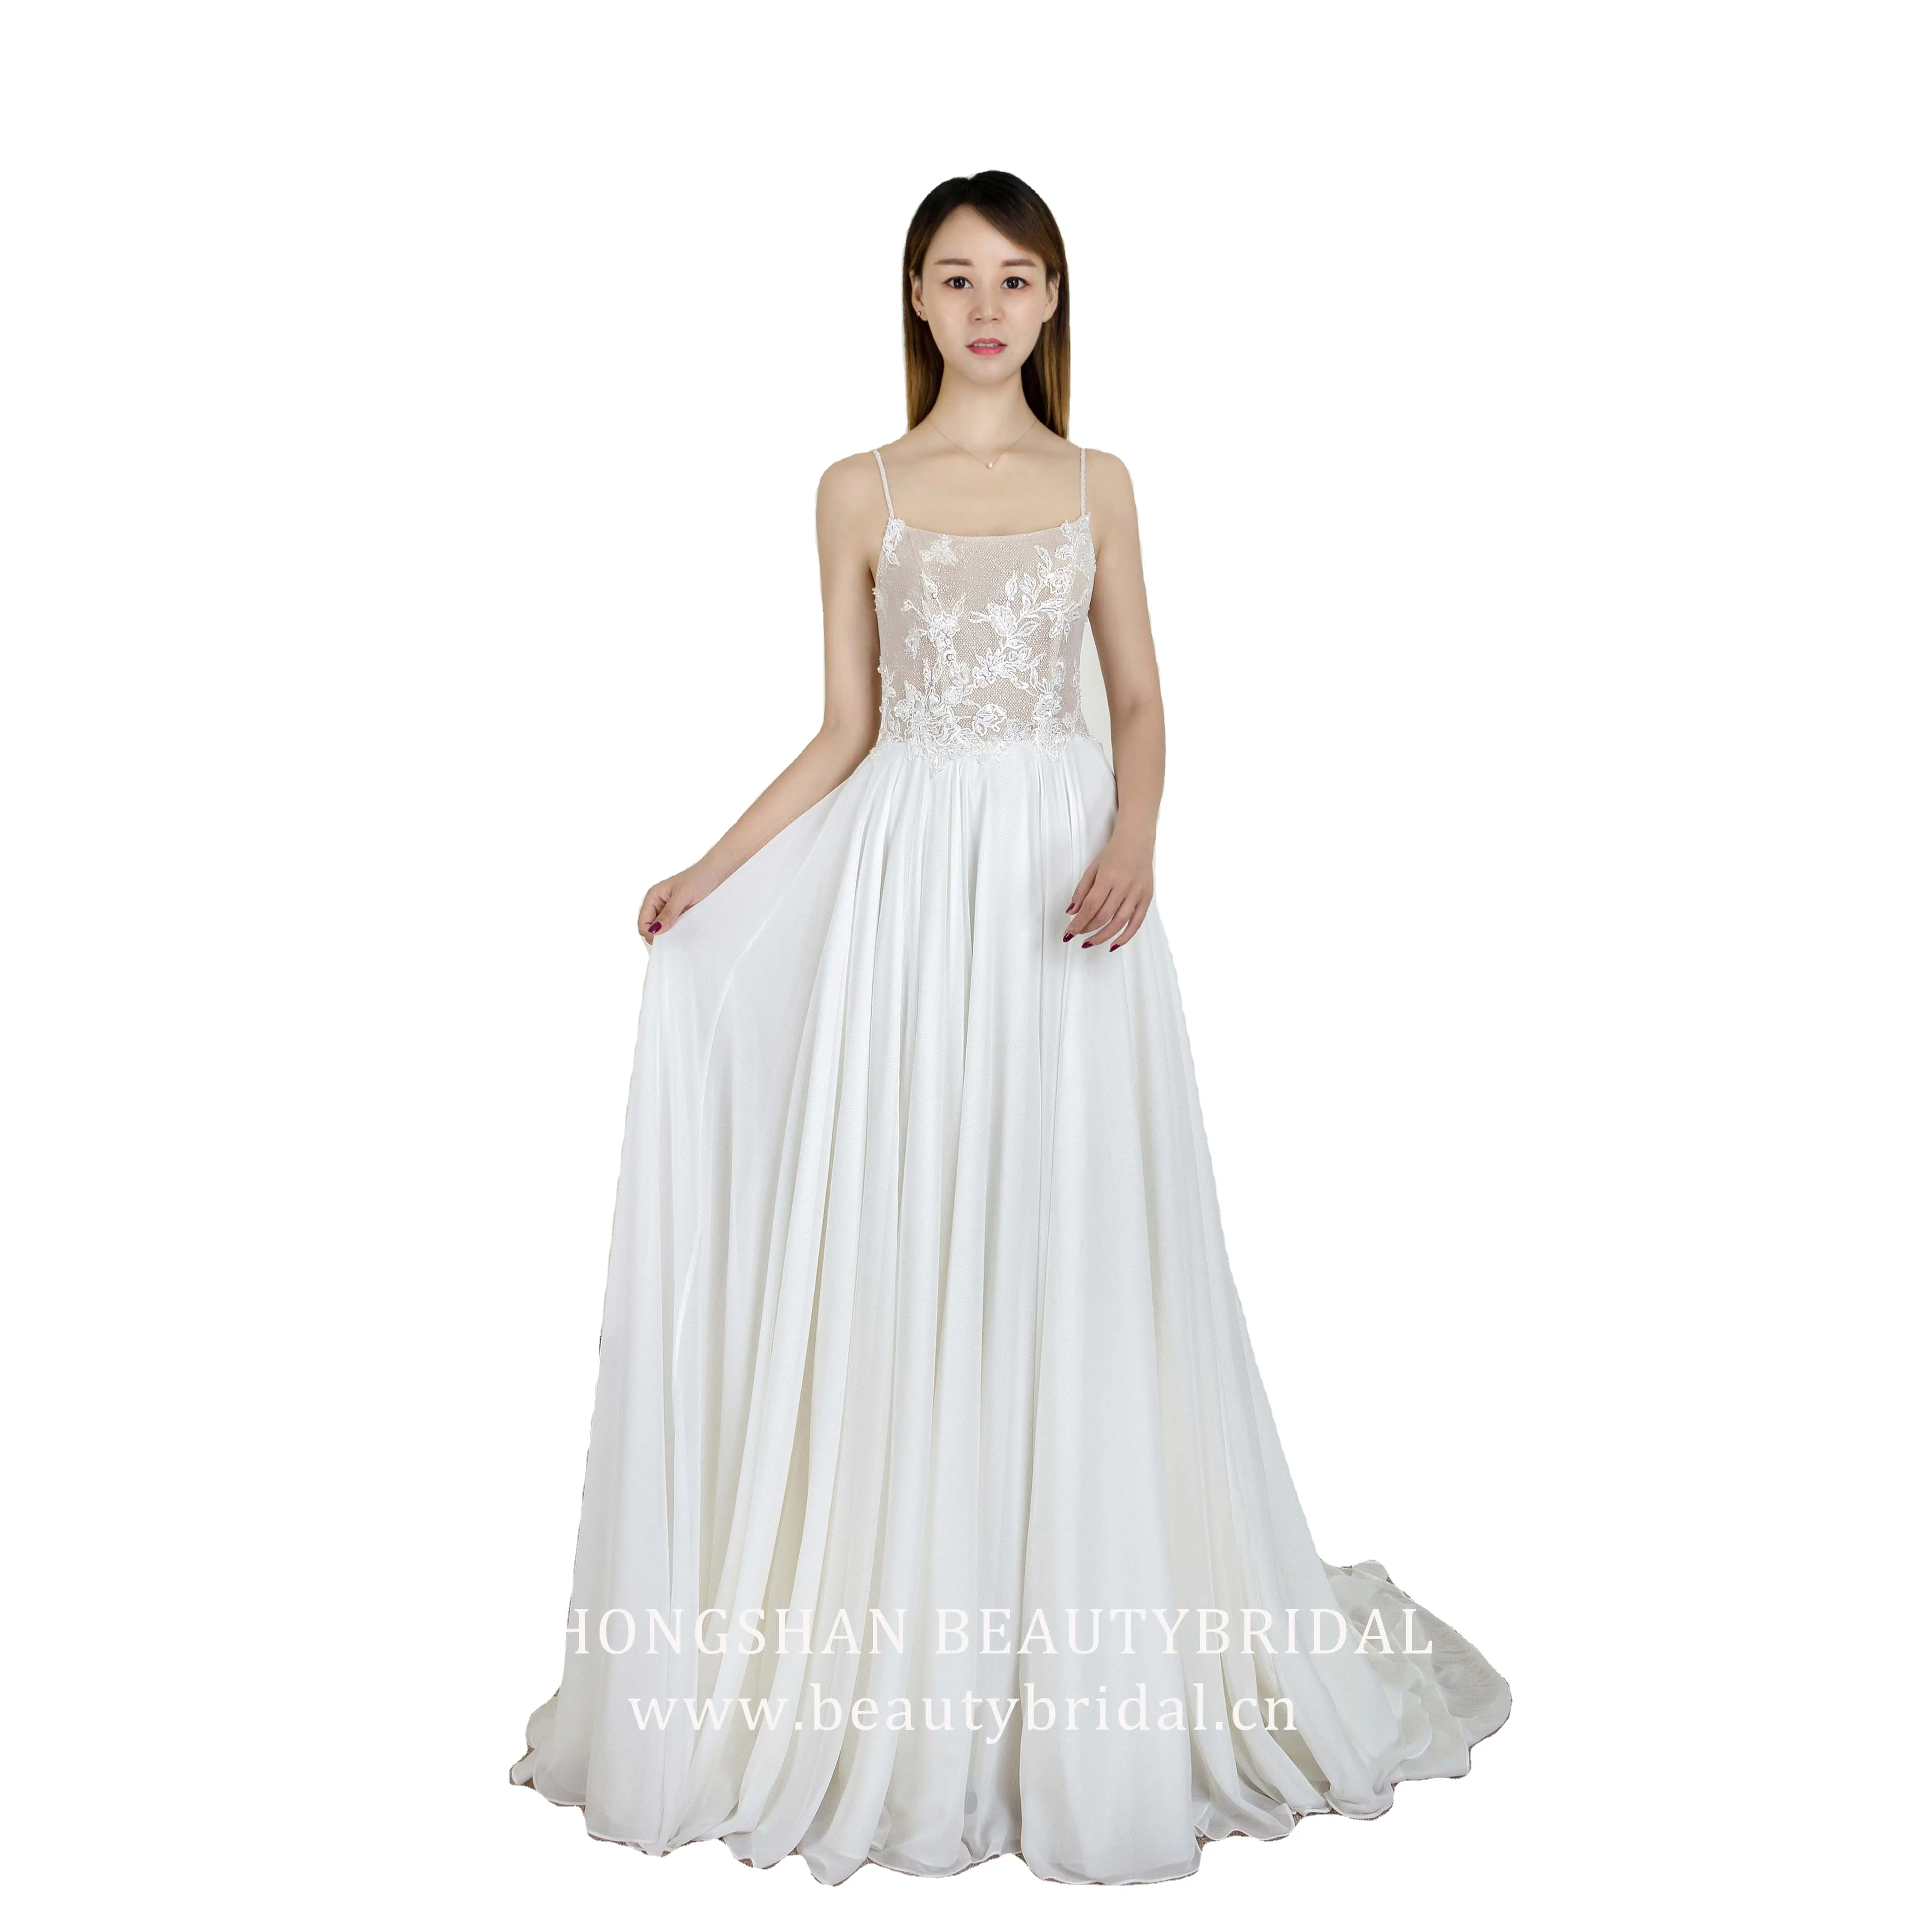 Zhongshan Beauty Bridal newest design of Chiffon wedding dress bridal gown with crystal beading